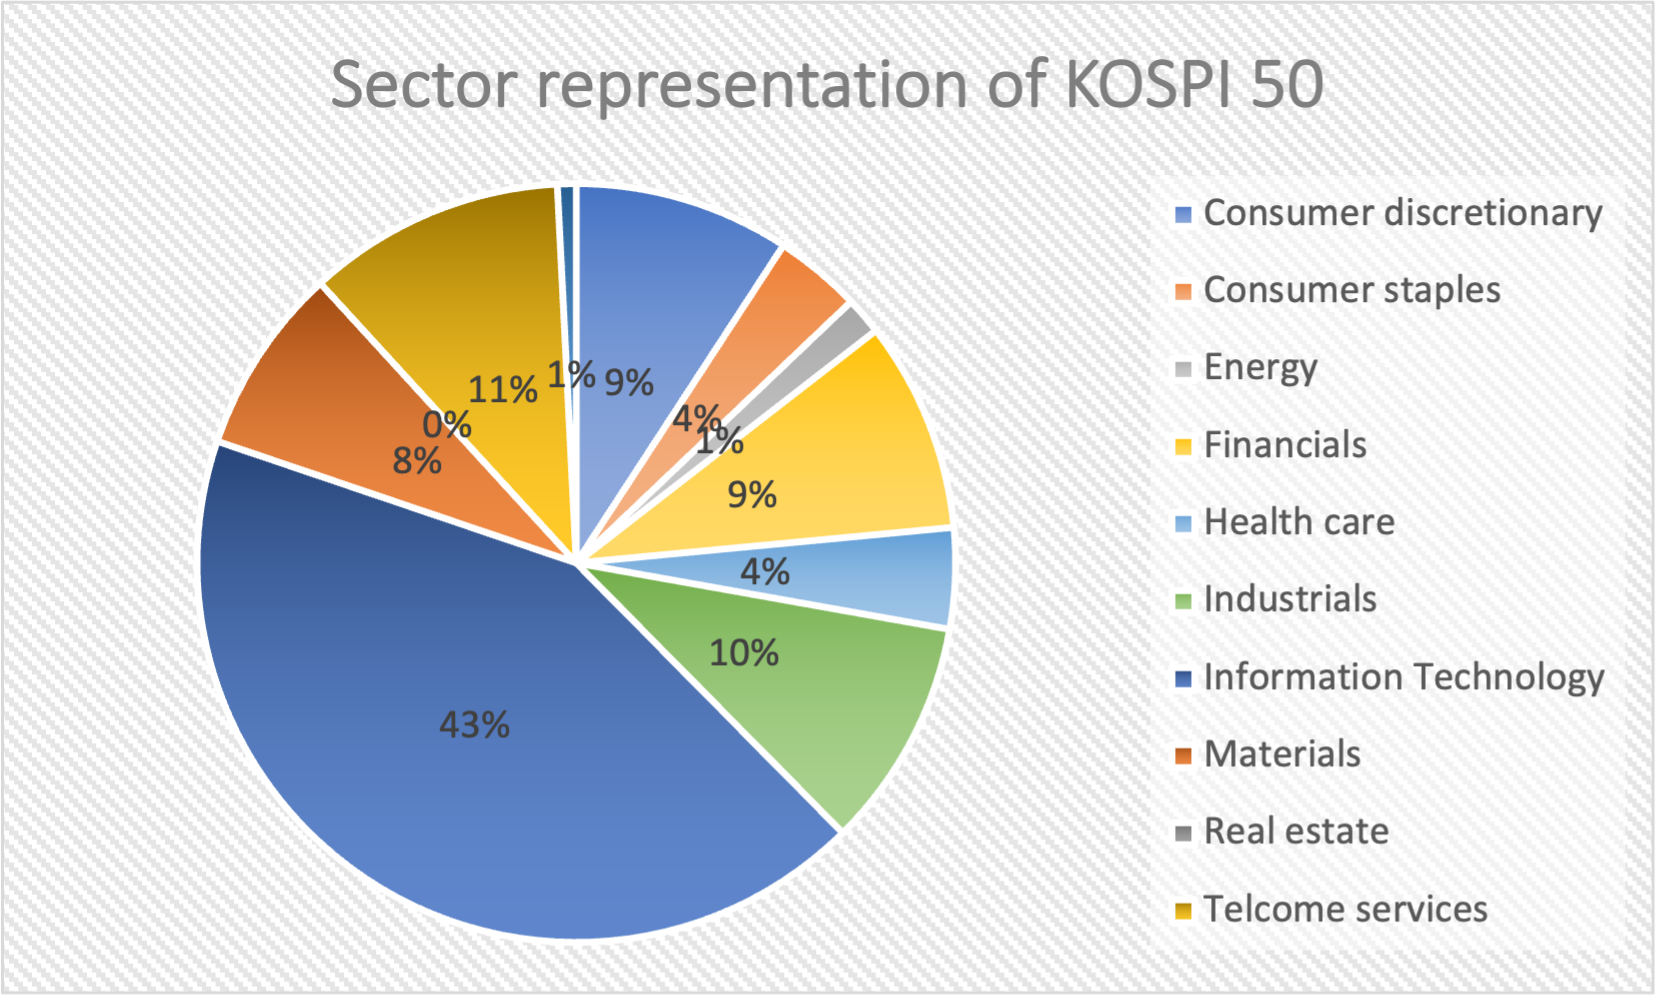 Sector representation in the KOSPI 50 index